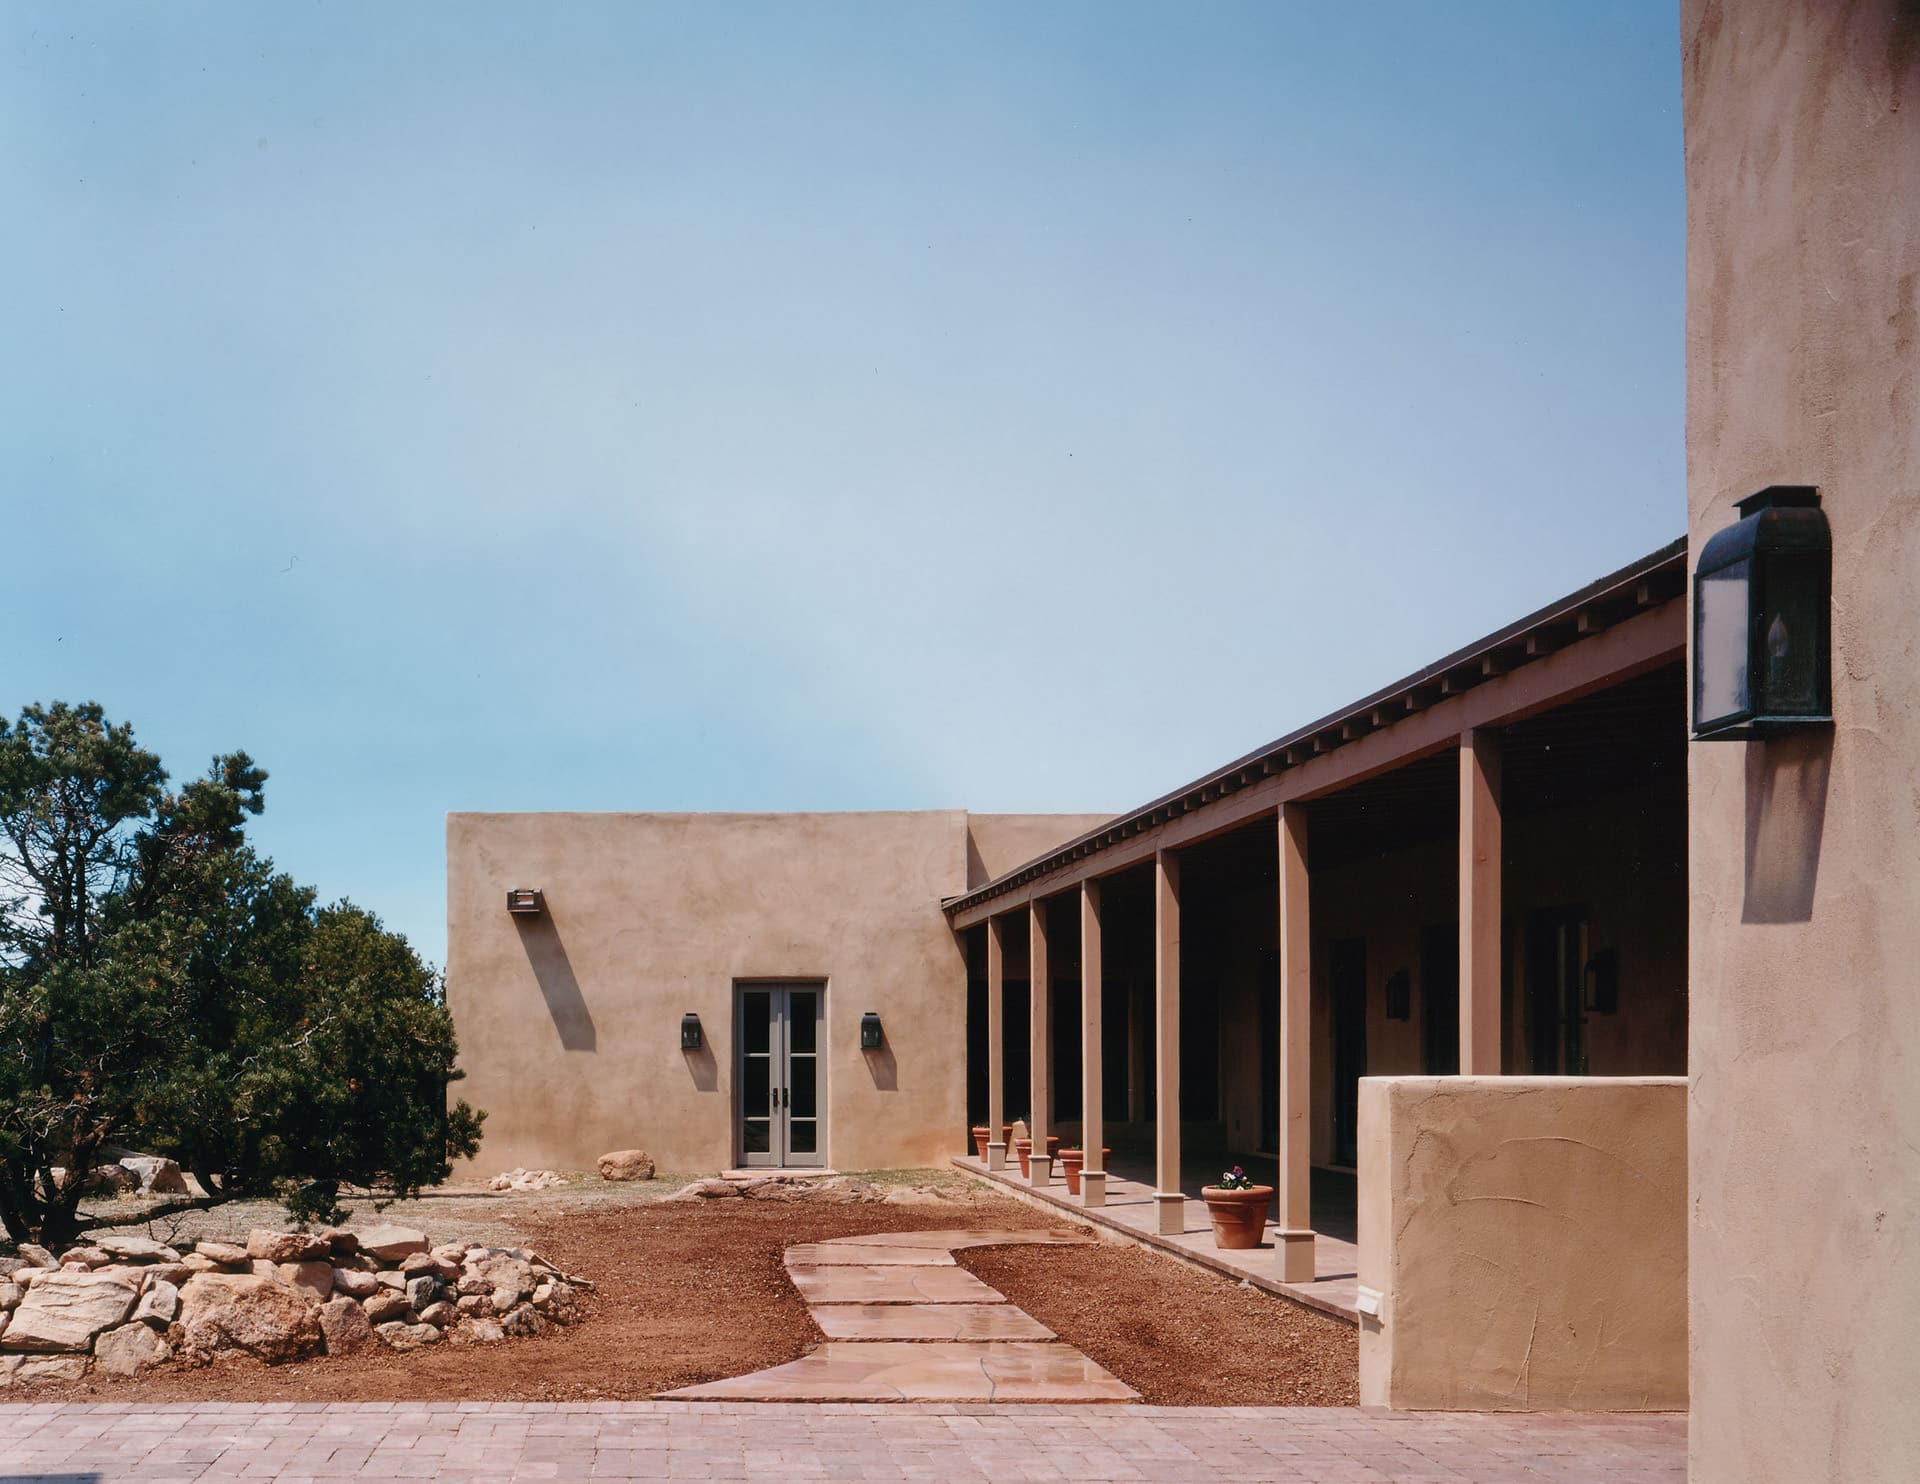 Exterior walkway of Santa Fe ranch home | Rodman Paul Architects